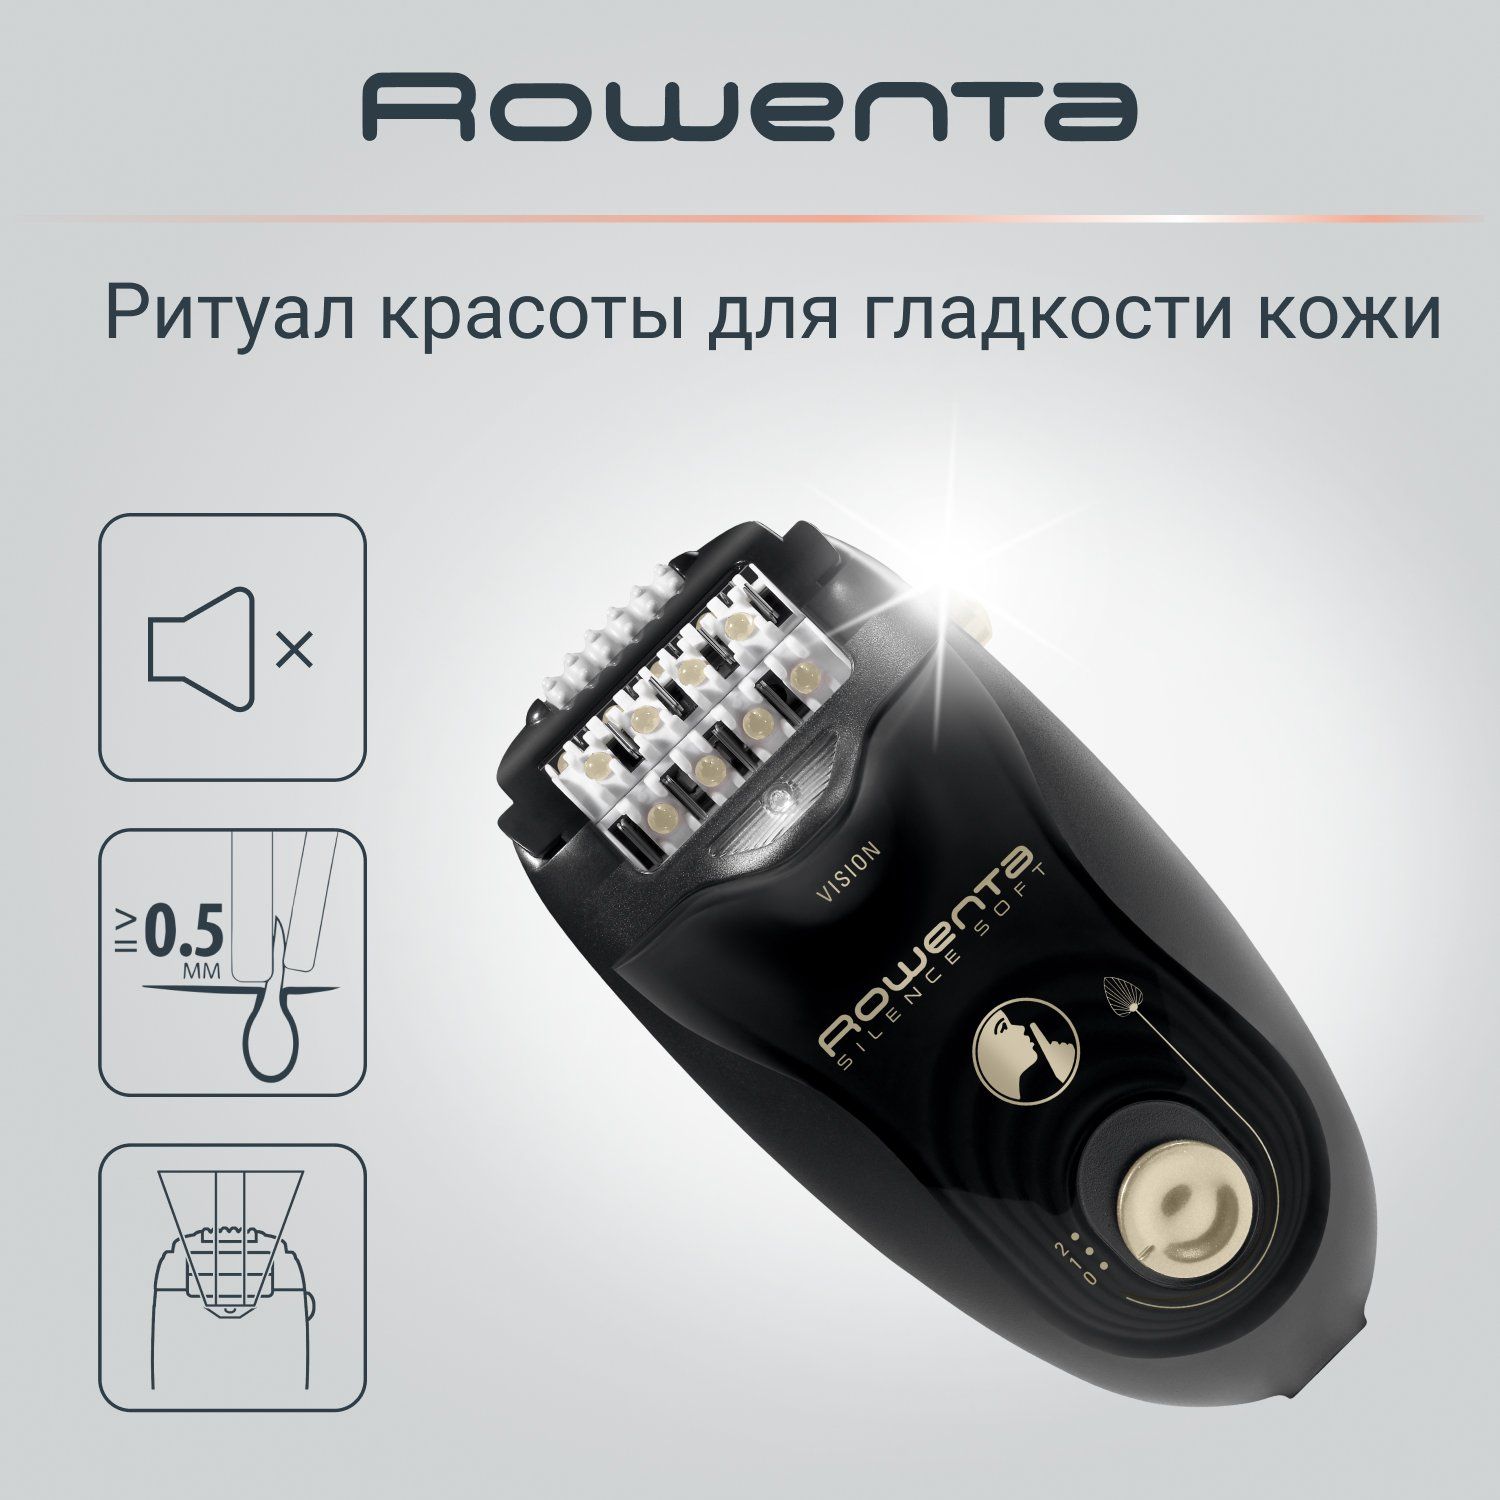 Эпилятор Rowenta Silence Soft EP5628F0, черный эпилятор rowenta silence soft ep5660d0 white pink